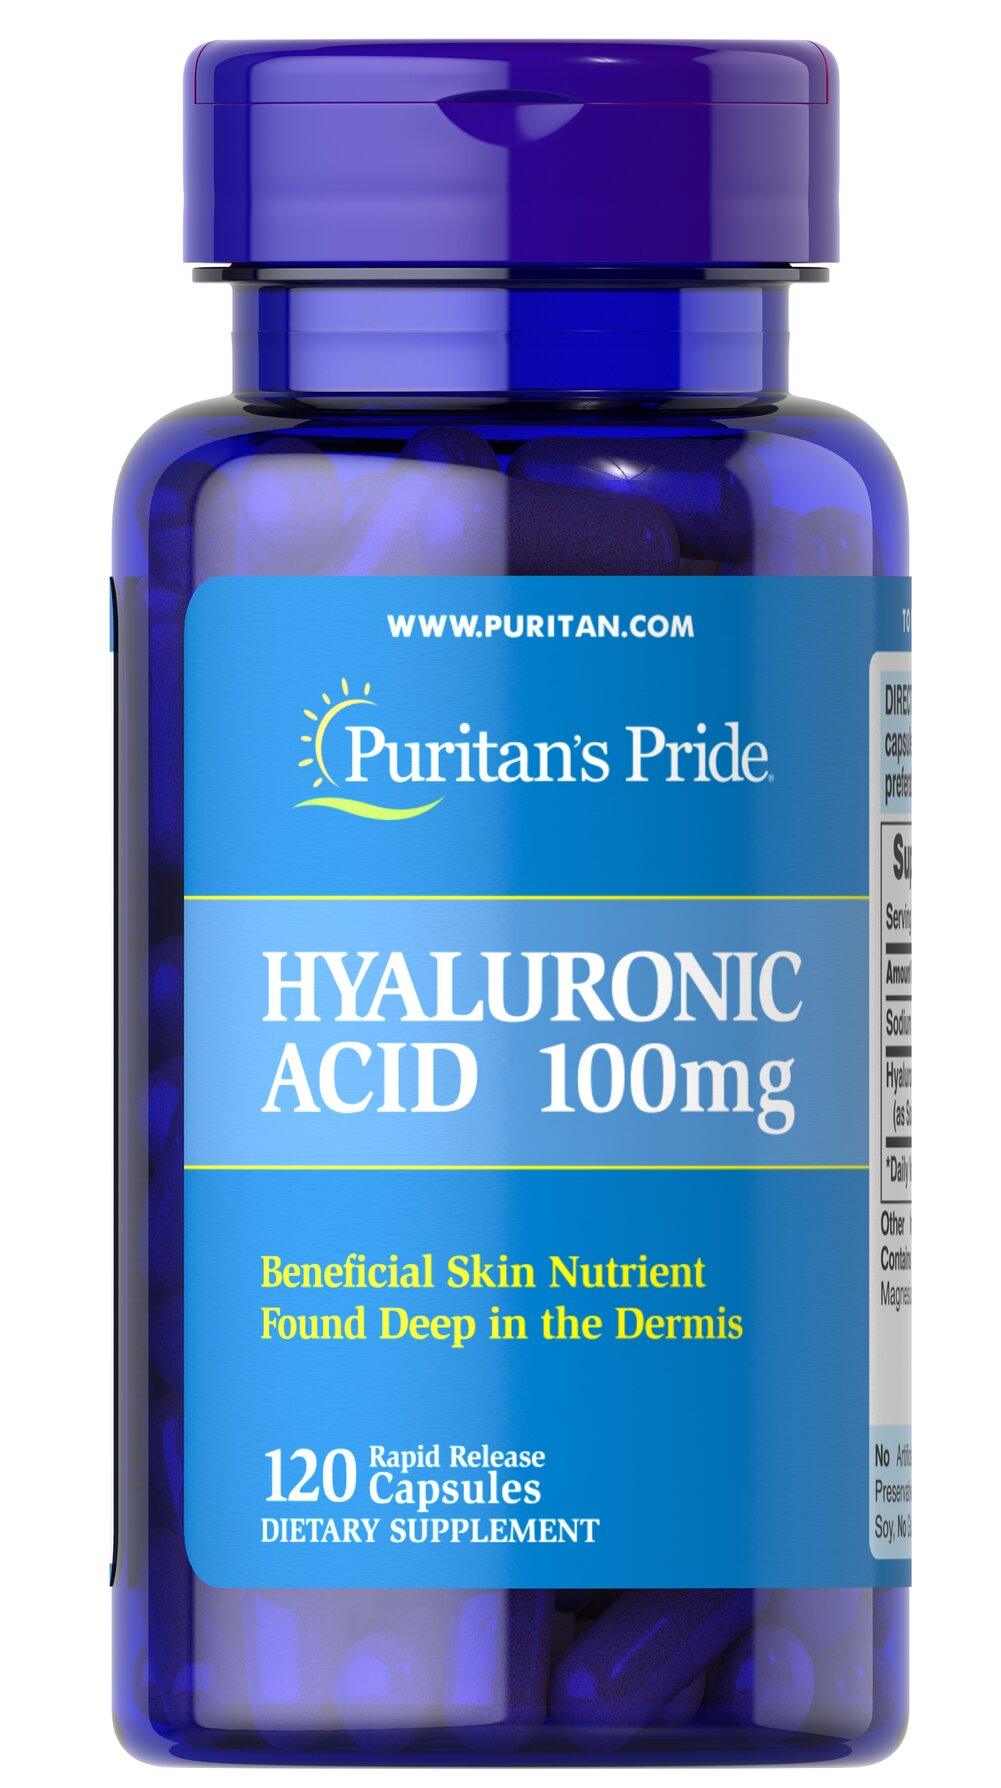 Puritan's Pride Acide Hyaluronique 100mg - mondialpharma.com